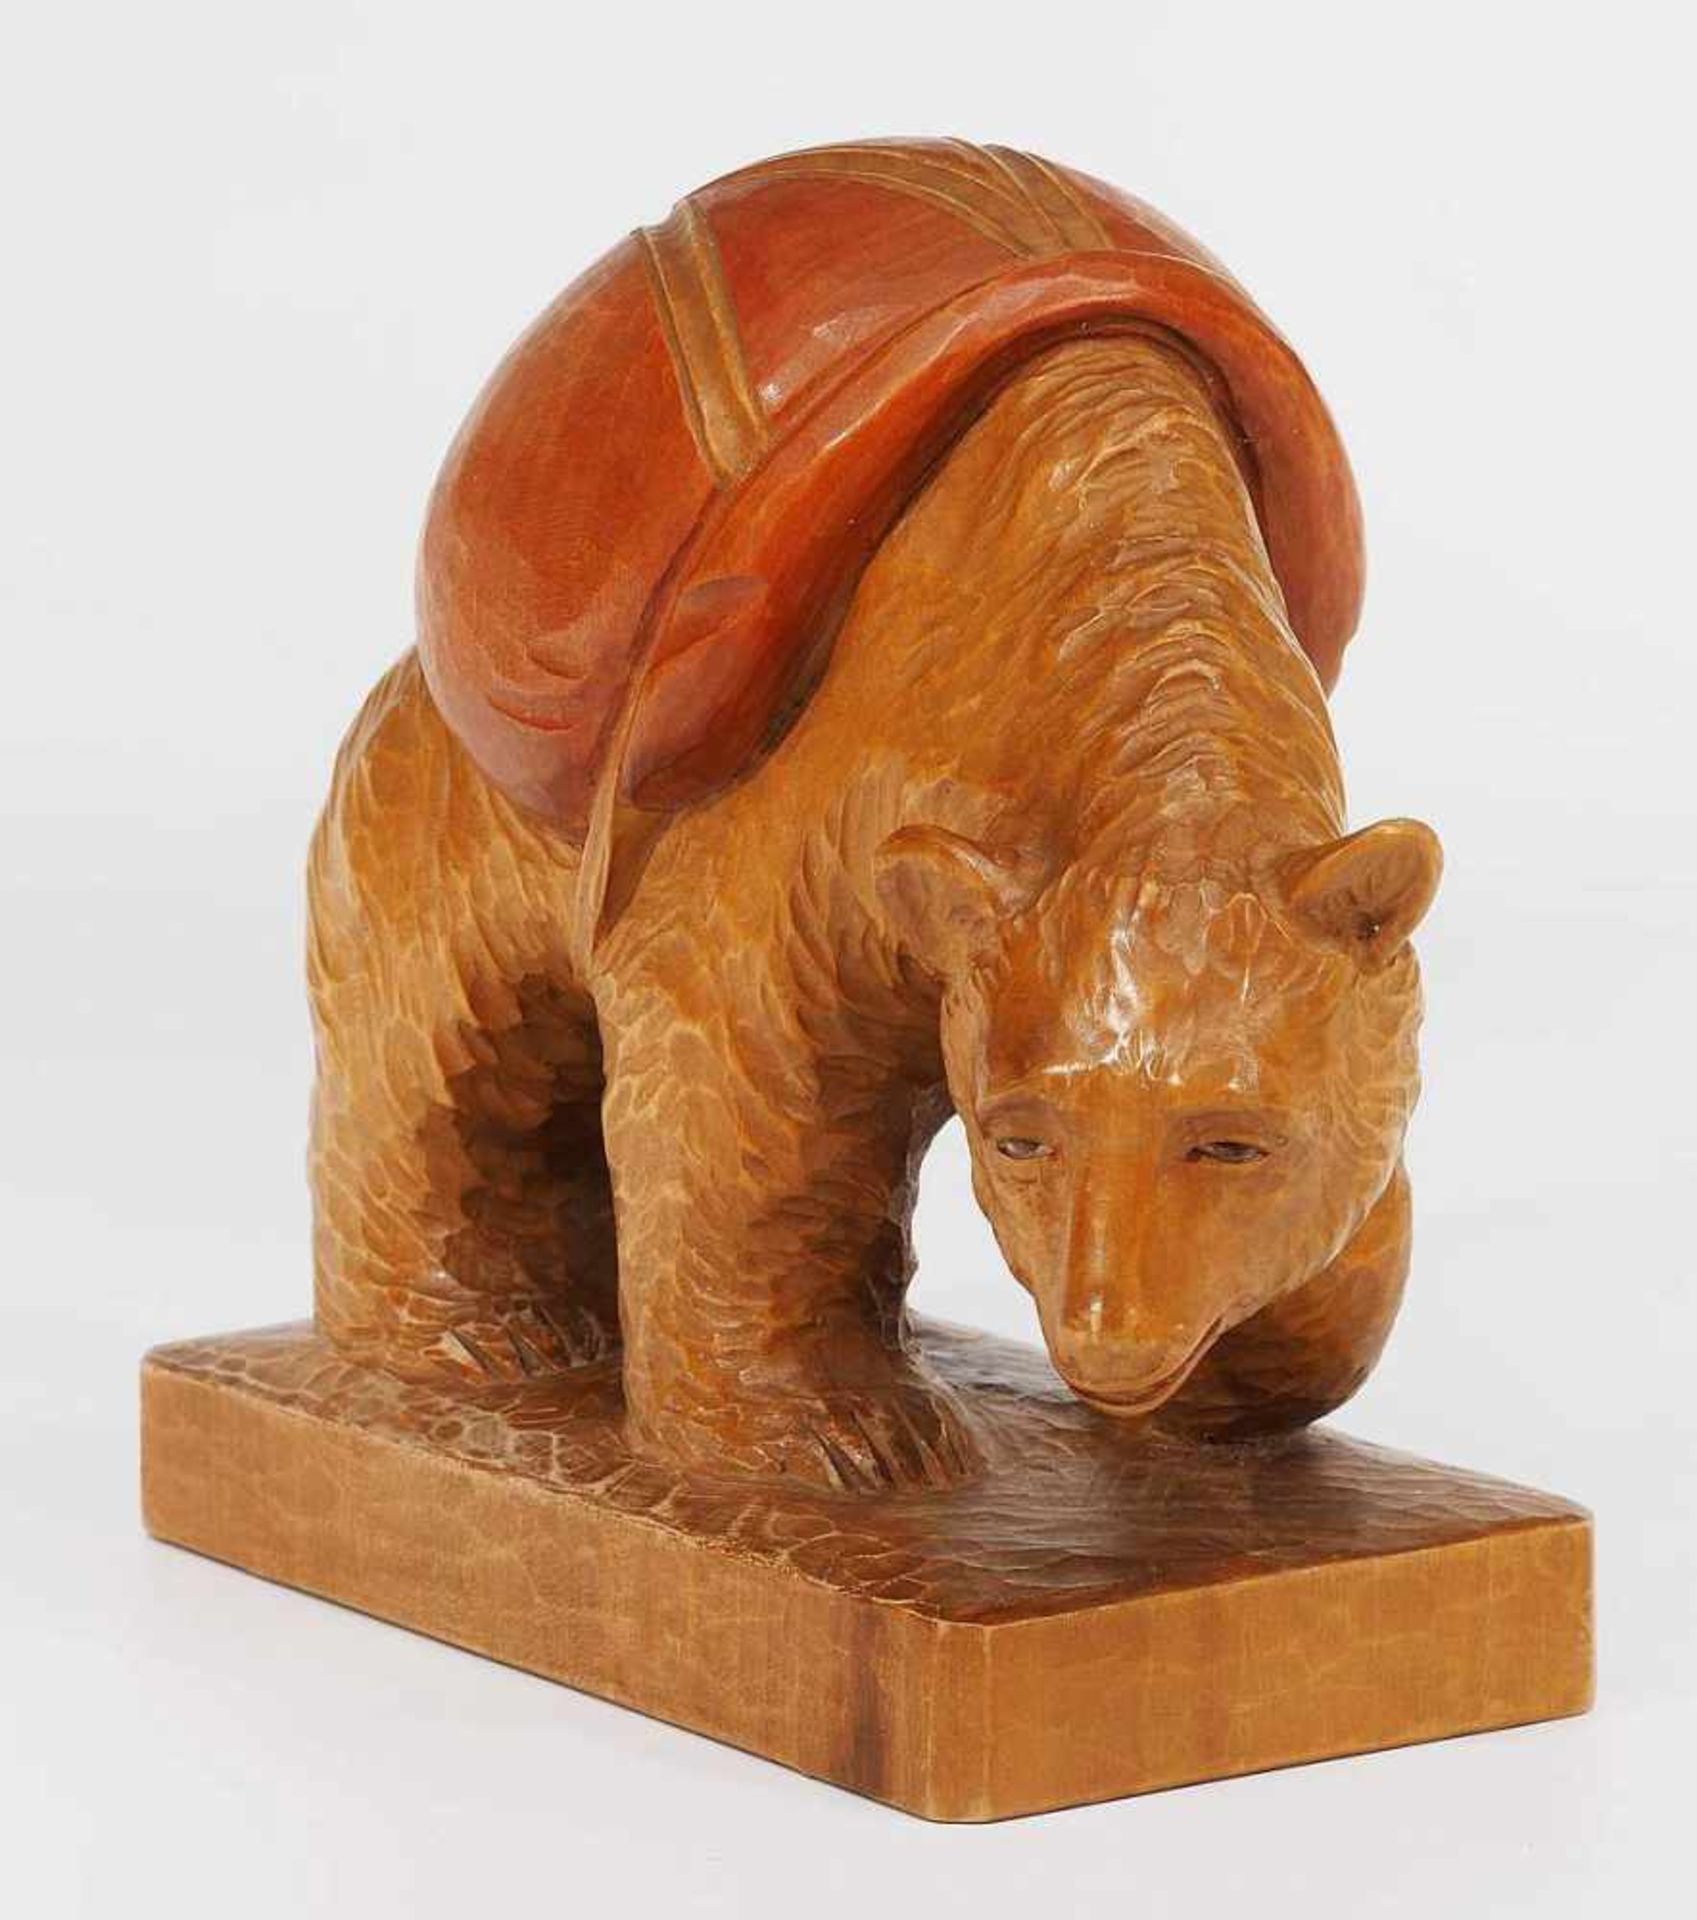 Korbiniansbär. Korbiniansbär. Holz, farbig gefaßt. Dargestellt wird ein Bär mit einem Packsattel auf - Bild 4 aus 6